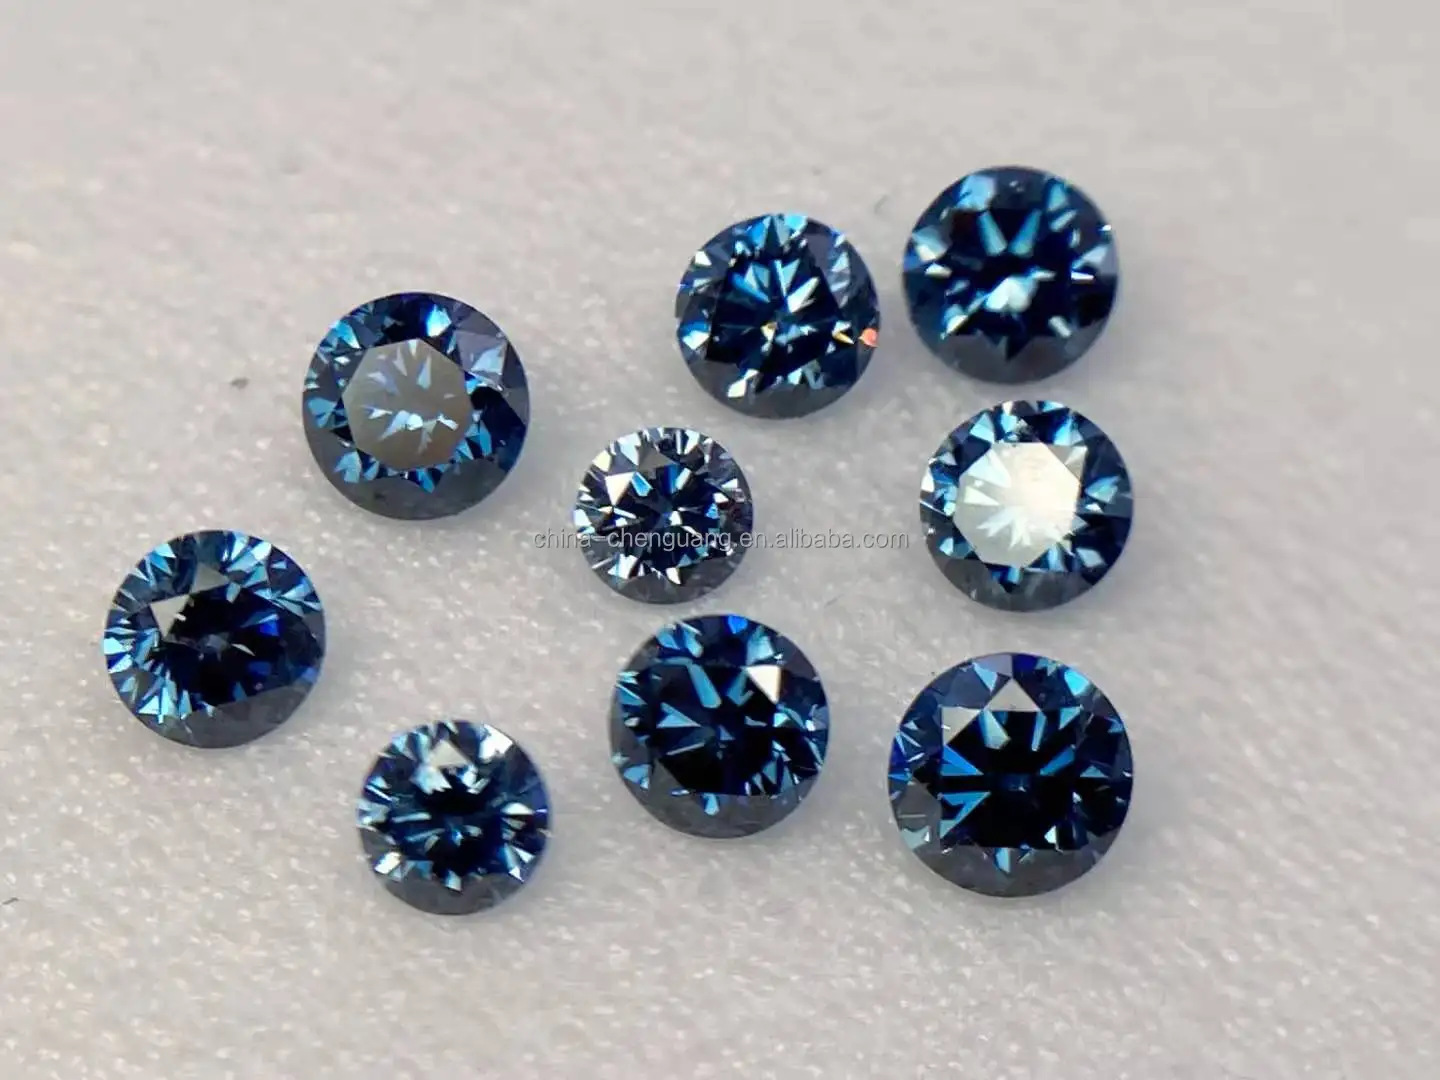 Kopen Ruwe Lab Grown Blauwe Diamant 1 Karaat Vvs Hele Verkoopprijs - Buy Lab Blauw Dianond,Ruwe Diamant,1 Carat Diaond Product on Alibaba.com